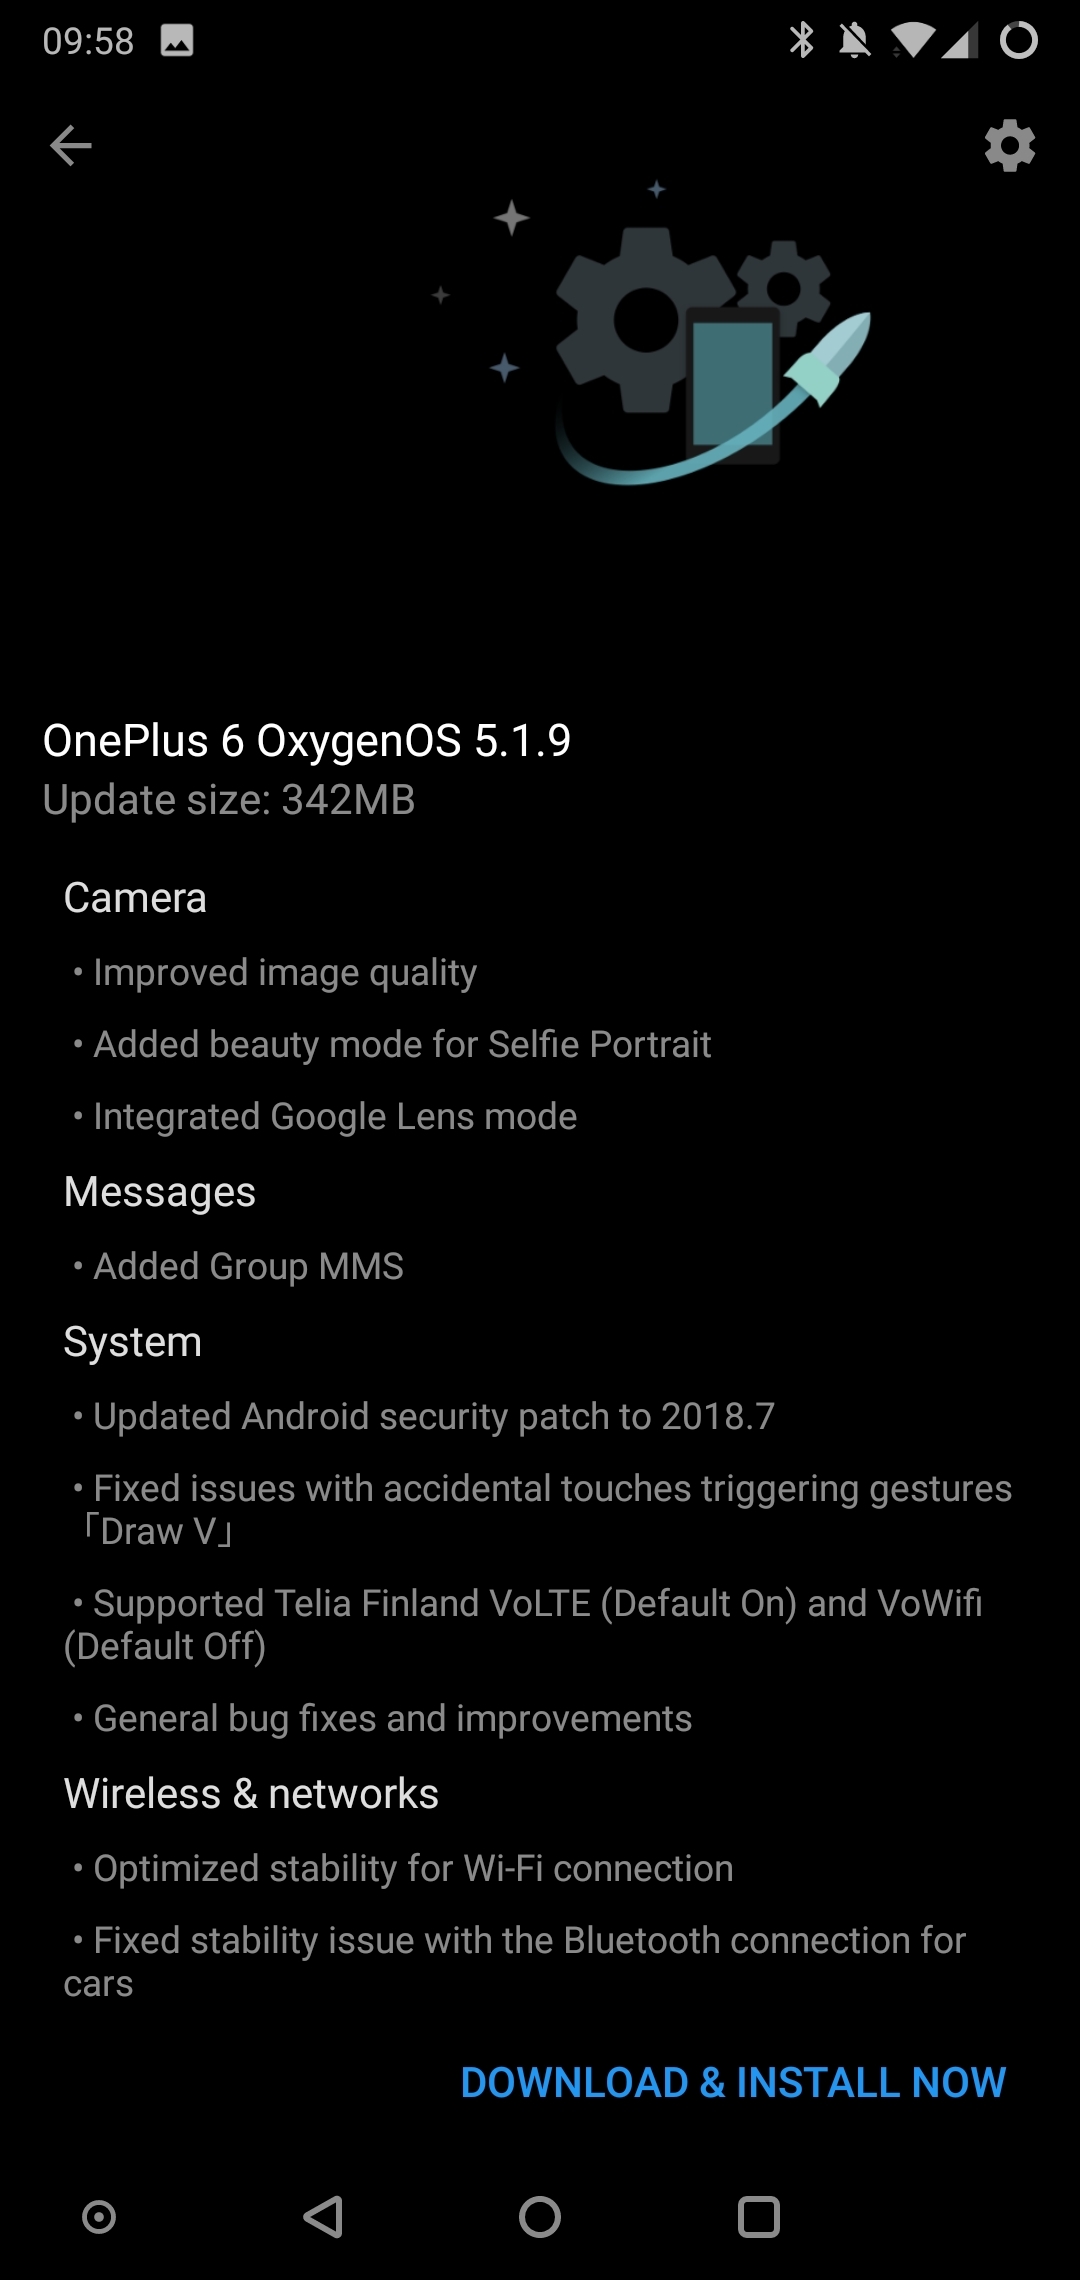 oppor17手机，一加 6 推出 OxygenOS 5.1.9 着重改善相机功效